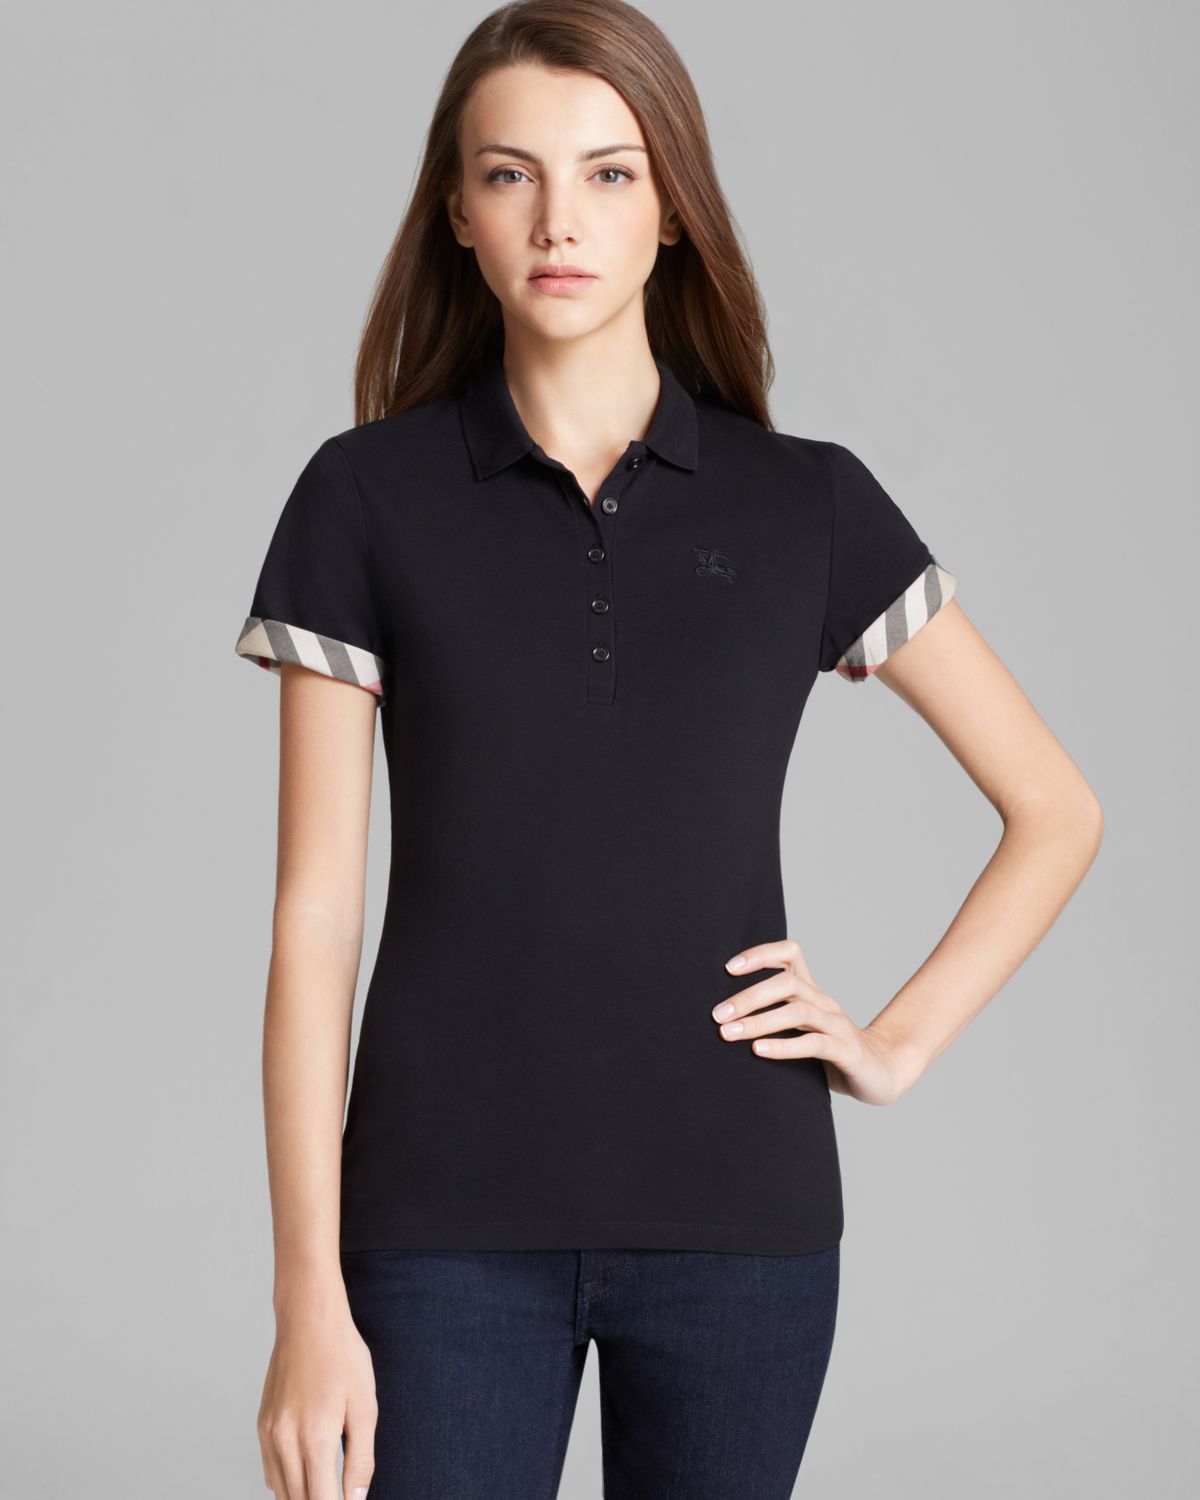 Burberry Brit Check Cuff Polo Shirt in Black | Lyst